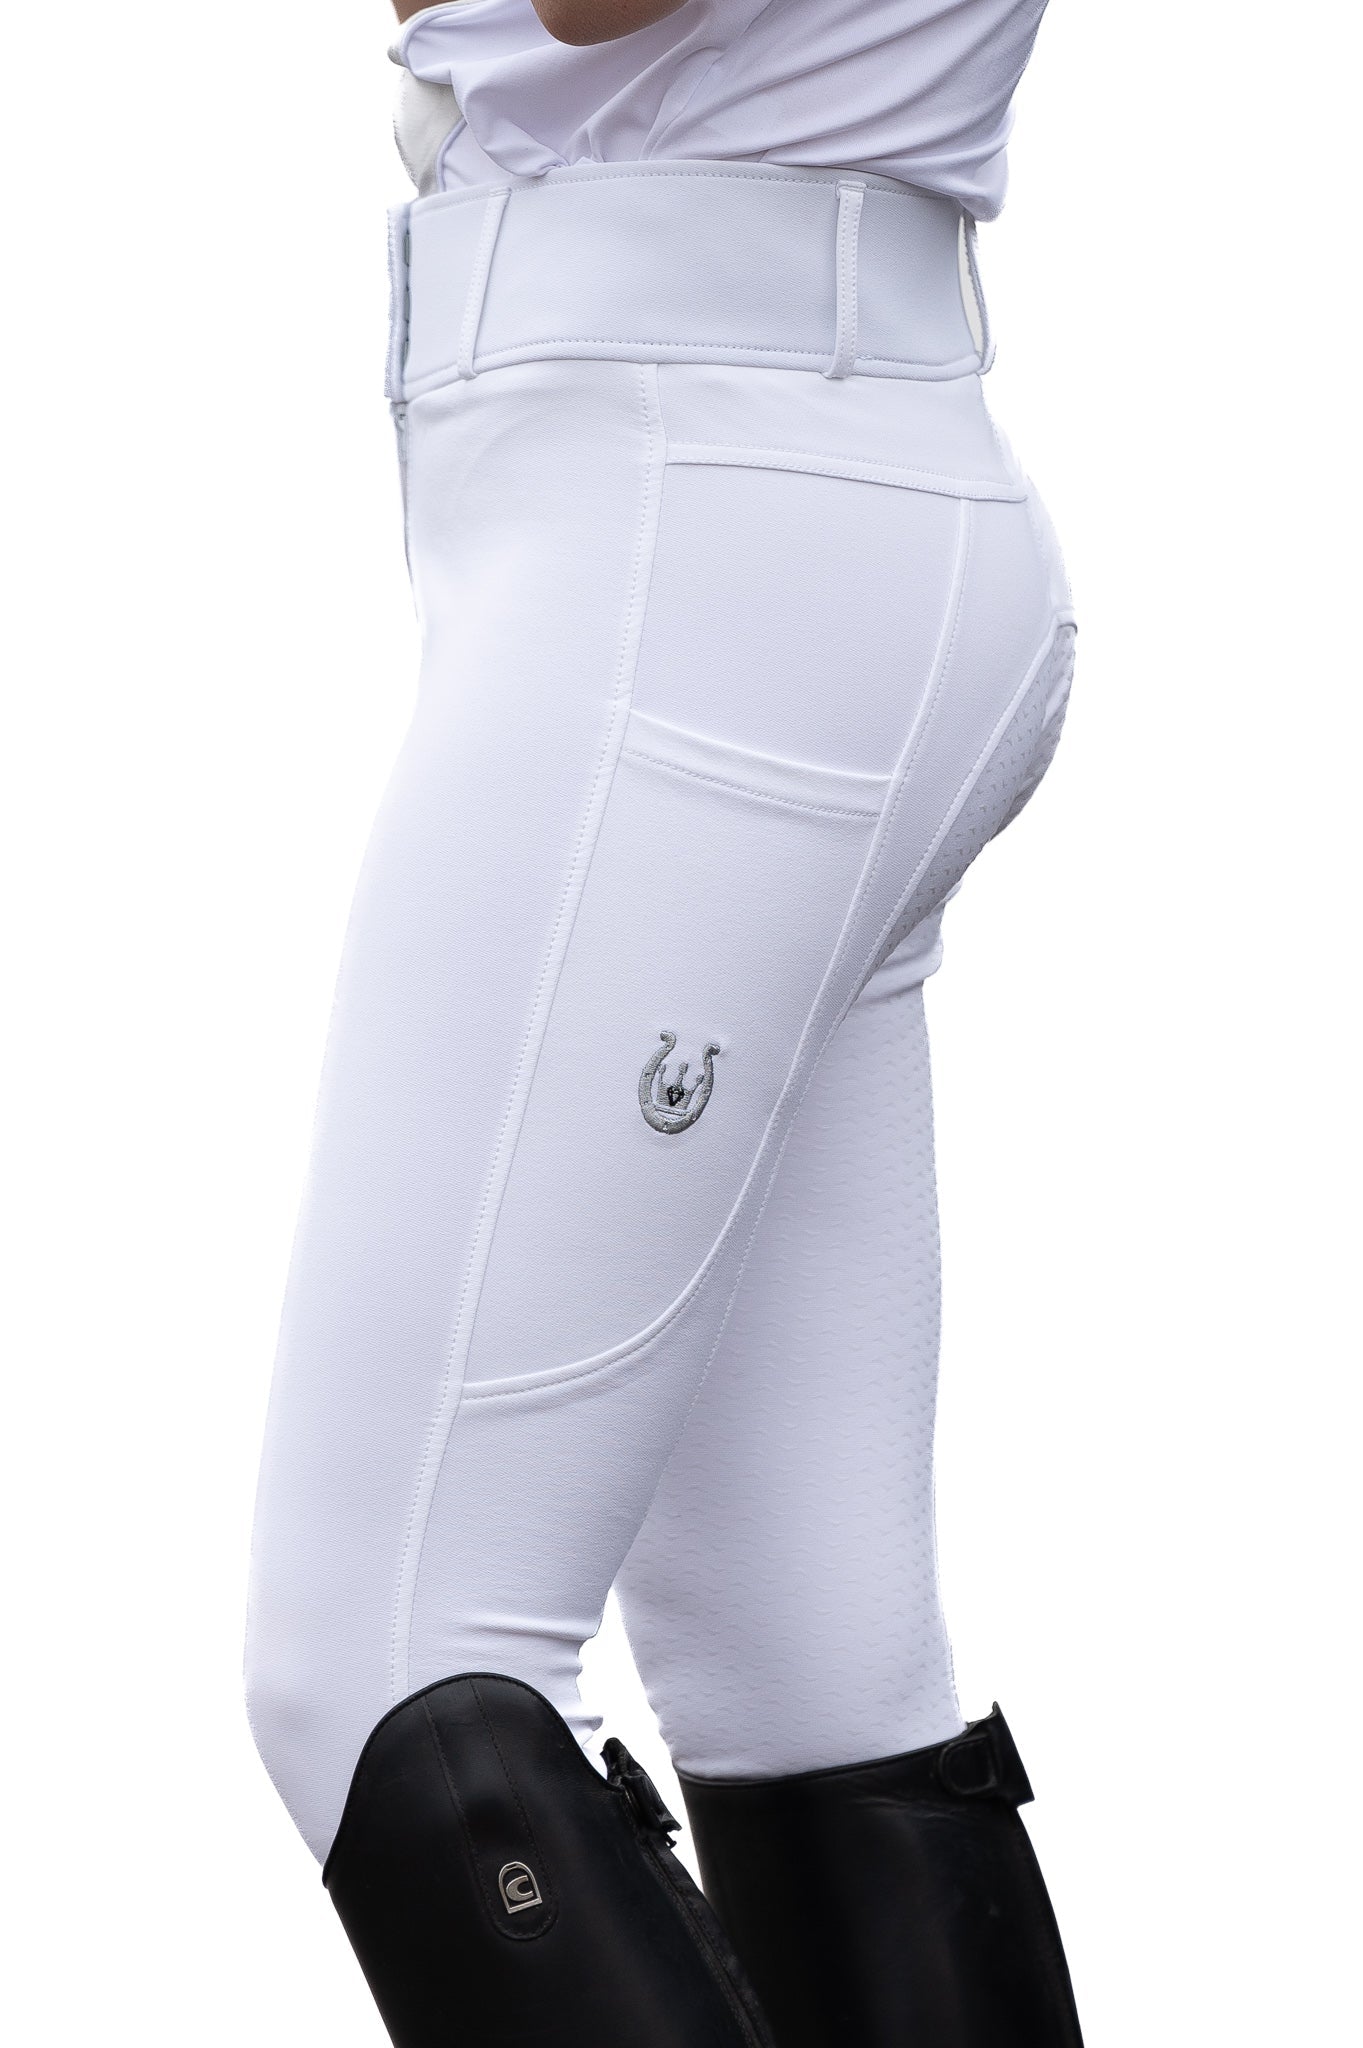 Pantalon blanc taille 22 - Vente Finale